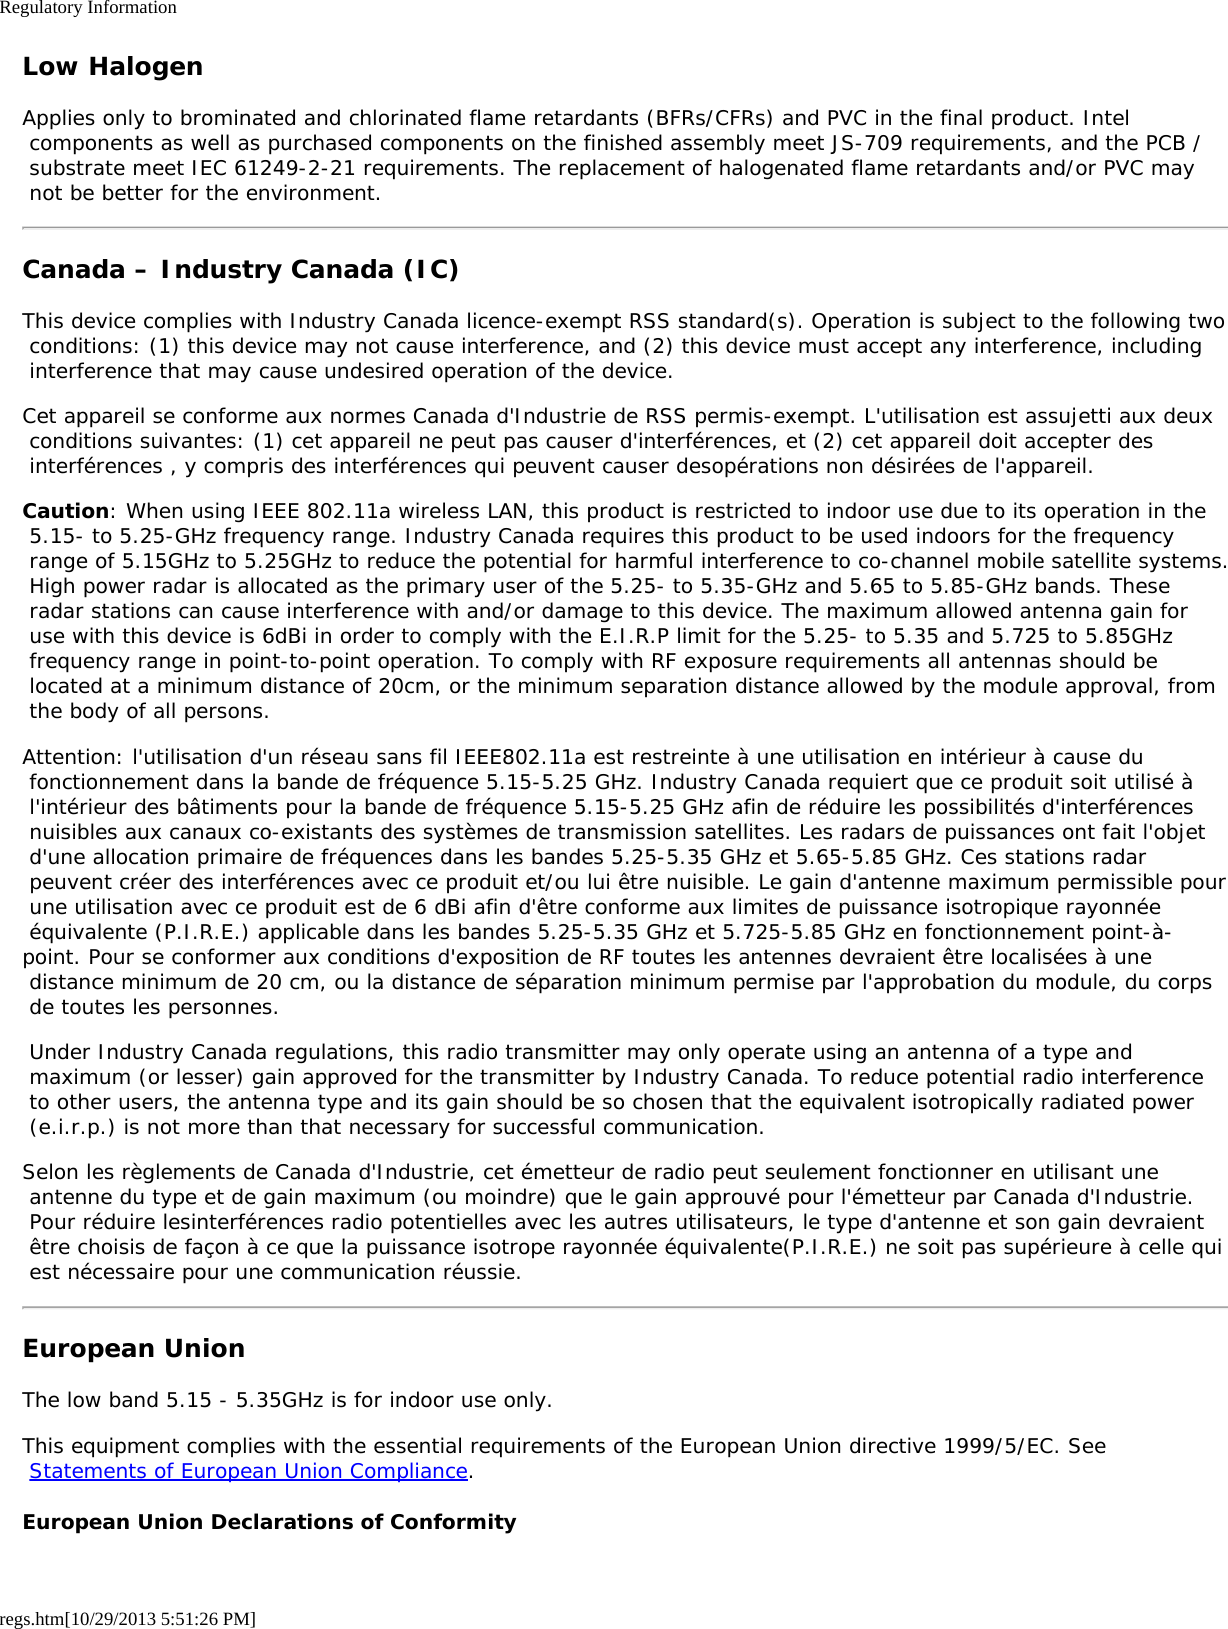 Regulatory Informationregs.htm[10/29/2013 5:51:26 PM]Low HalogenApplies only to brominated and chlorinated flame retardants (BFRs/CFRs) and PVC in the final product. Intel components as well as purchased components on the finished assembly meet JS-709 requirements, and the PCB / substrate meet IEC 61249-2-21 requirements. The replacement of halogenated flame retardants and/or PVC may not be better for the environment.Canada – Industry Canada (IC)This device complies with Industry Canada licence-exempt RSS standard(s). Operation is subject to the following two conditions: (1) this device may not cause interference, and (2) this device must accept any interference, including interference that may cause undesired operation of the device.Cet appareil se conforme aux normes Canada d&apos;Industrie de RSS permis-exempt. L&apos;utilisation est assujetti aux deux conditions suivantes: (1) cet appareil ne peut pas causer d&apos;interférences, et (2) cet appareil doit accepter des interférences , y compris des interférences qui peuvent causer desopérations non désirées de l&apos;appareil.Caution: When using IEEE 802.11a wireless LAN, this product is restricted to indoor use due to its operation in the 5.15- to 5.25-GHz frequency range. Industry Canada requires this product to be used indoors for the frequency range of 5.15GHz to 5.25GHz to reduce the potential for harmful interference to co-channel mobile satellite systems. High power radar is allocated as the primary user of the 5.25- to 5.35-GHz and 5.65 to 5.85-GHz bands. These radar stations can cause interference with and/or damage to this device. The maximum allowed antenna gain for use with this device is 6dBi in order to comply with the E.I.R.P limit for the 5.25- to 5.35 and 5.725 to 5.85GHz frequency range in point-to-point operation. To comply with RF exposure requirements all antennas should be located at a minimum distance of 20cm, or the minimum separation distance allowed by the module approval, from the body of all persons.Attention: l&apos;utilisation d&apos;un réseau sans fil IEEE802.11a est restreinte à une utilisation en intérieur à cause du fonctionnement dans la bande de fréquence 5.15-5.25 GHz. Industry Canada requiert que ce produit soit utilisé à l&apos;intérieur des bâtiments pour la bande de fréquence 5.15-5.25 GHz afin de réduire les possibilités d&apos;interférences nuisibles aux canaux co-existants des systèmes de transmission satellites. Les radars de puissances ont fait l&apos;objet d&apos;une allocation primaire de fréquences dans les bandes 5.25-5.35 GHz et 5.65-5.85 GHz. Ces stations radar peuvent créer des interférences avec ce produit et/ou lui être nuisible. Le gain d&apos;antenne maximum permissible pour une utilisation avec ce produit est de 6 dBi afin d&apos;être conforme aux limites de puissance isotropique rayonnée équivalente (P.I.R.E.) applicable dans les bandes 5.25-5.35 GHz et 5.725-5.85 GHz en fonctionnement point-à-point. Pour se conformer aux conditions d&apos;exposition de RF toutes les antennes devraient être localisées à une distance minimum de 20 cm, ou la distance de séparation minimum permise par l&apos;approbation du module, du corps de toutes les personnes. Under Industry Canada regulations, this radio transmitter may only operate using an antenna of a type and maximum (or lesser) gain approved for the transmitter by Industry Canada. To reduce potential radio interference to other users, the antenna type and its gain should be so chosen that the equivalent isotropically radiated power (e.i.r.p.) is not more than that necessary for successful communication.Selon les règlements de Canada d&apos;Industrie, cet émetteur de radio peut seulement fonctionner en utilisant une antenne du type et de gain maximum (ou moindre) que le gain approuvé pour l&apos;émetteur par Canada d&apos;Industrie. Pour réduire lesinterférences radio potentielles avec les autres utilisateurs, le type d&apos;antenne et son gain devraient être choisis de façon à ce que la puissance isotrope rayonnée équivalente(P.I.R.E.) ne soit pas supérieure à celle qui est nécessaire pour une communication réussie.European UnionThe low band 5.15 - 5.35GHz is for indoor use only.This equipment complies with the essential requirements of the European Union directive 1999/5/EC. See Statements of European Union Compliance.European Union Declarations of Conformity